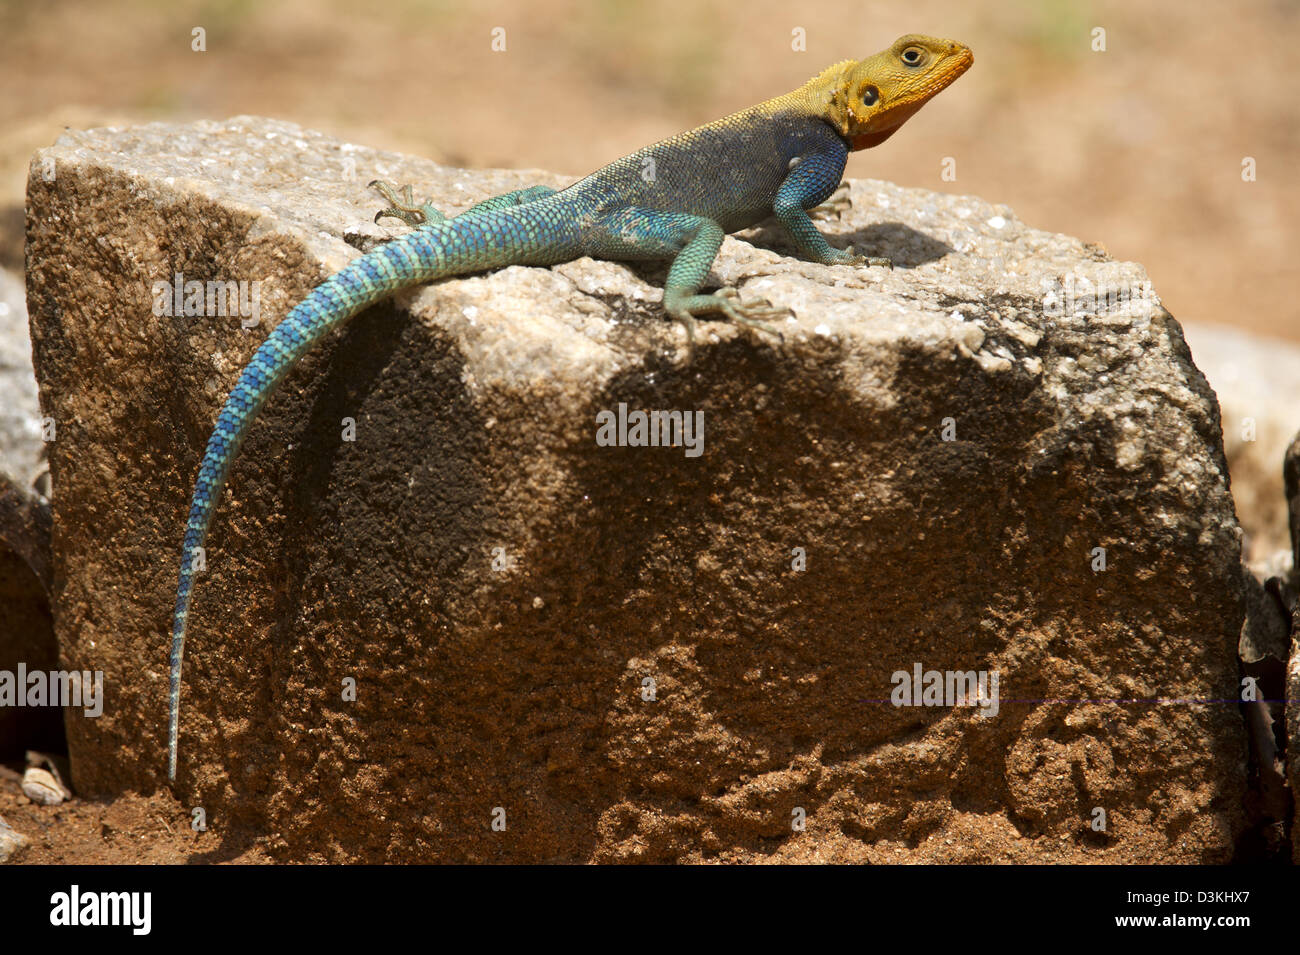 Agama lizard, Taita Hills Wildlife Sanctuary, Kenya Stock Photo